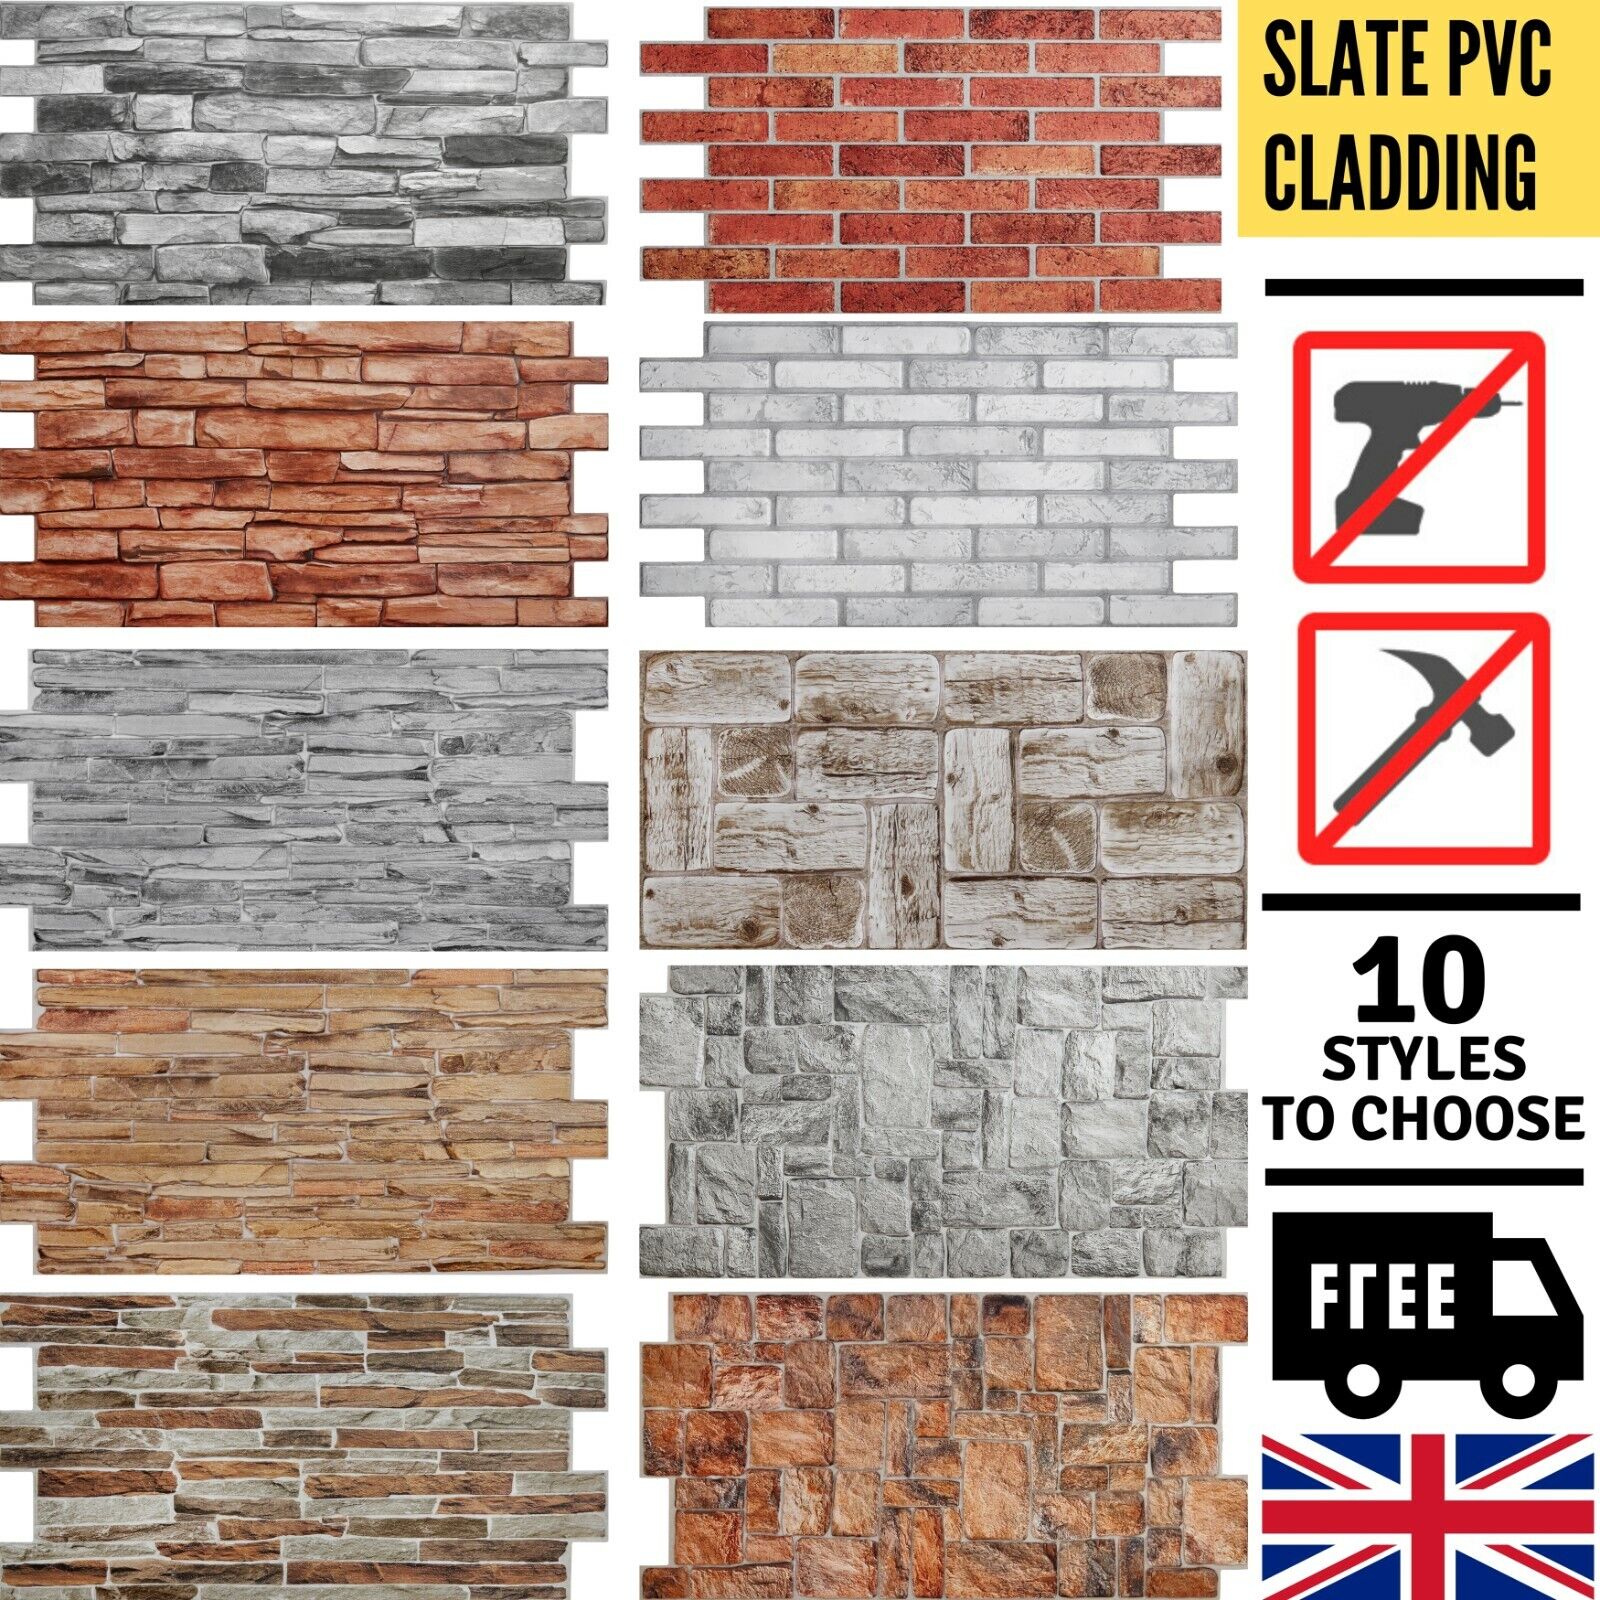 Beplas Komastyle Decorative PVC Wall Cladding: A sustainable alternative to  ceramic tiling | Be-Plas Hygienic Walls & Ceilings Ltd | NBS BIM Library